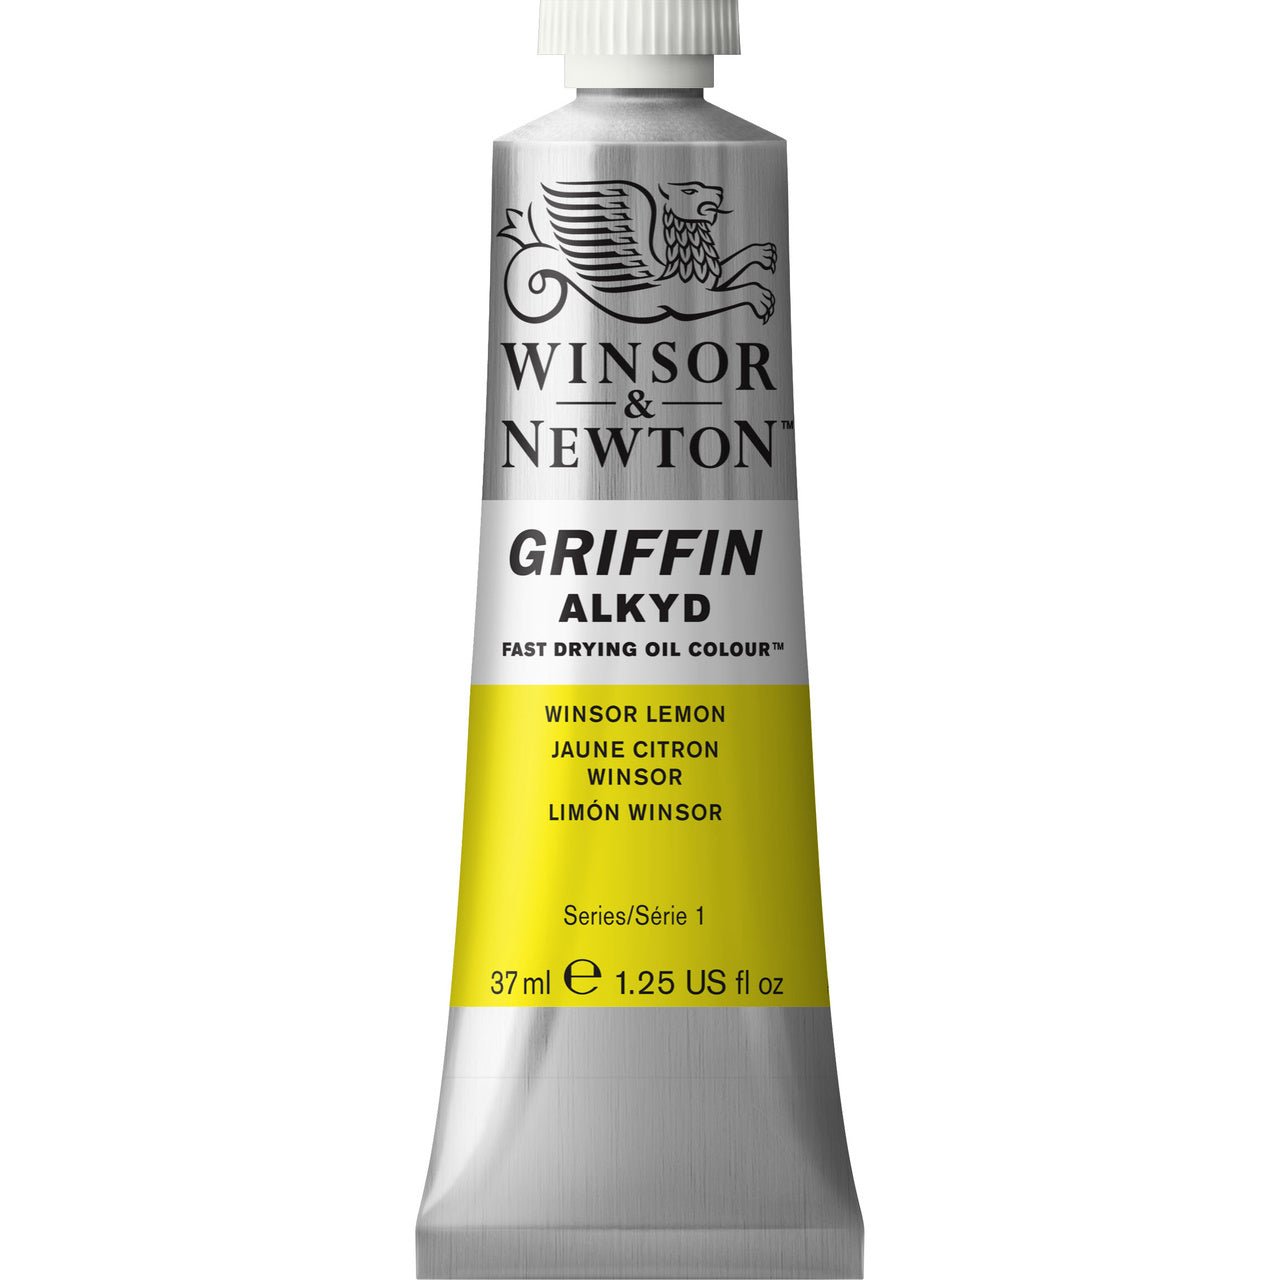 Winsor & Newton Griffin Alkyd 37ml Winsor Lemon - merriartist.com